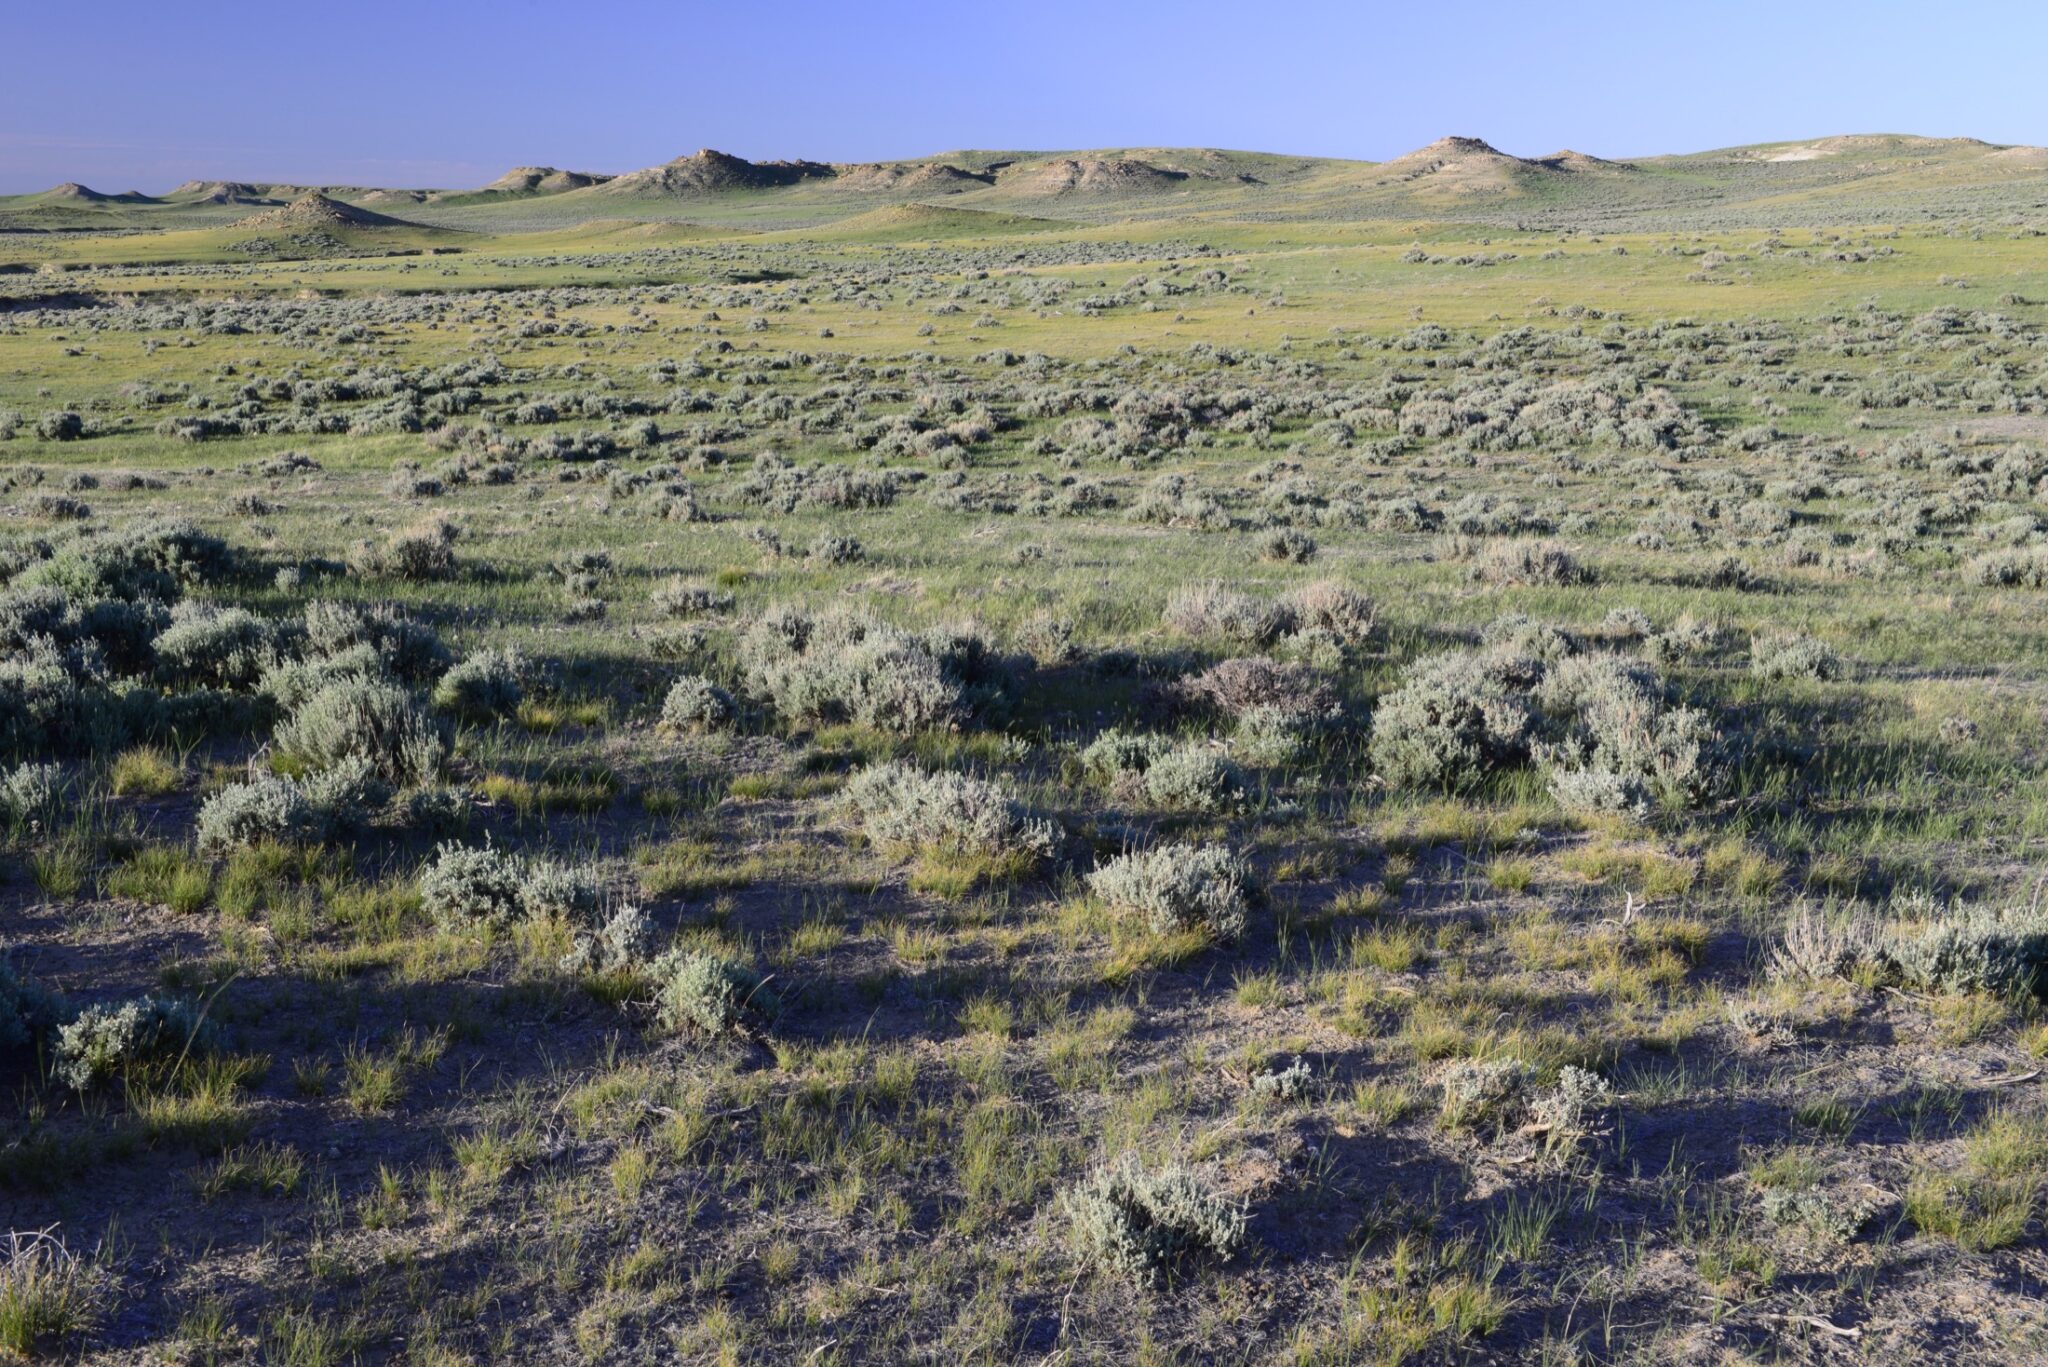 An open prairie with sparse grass